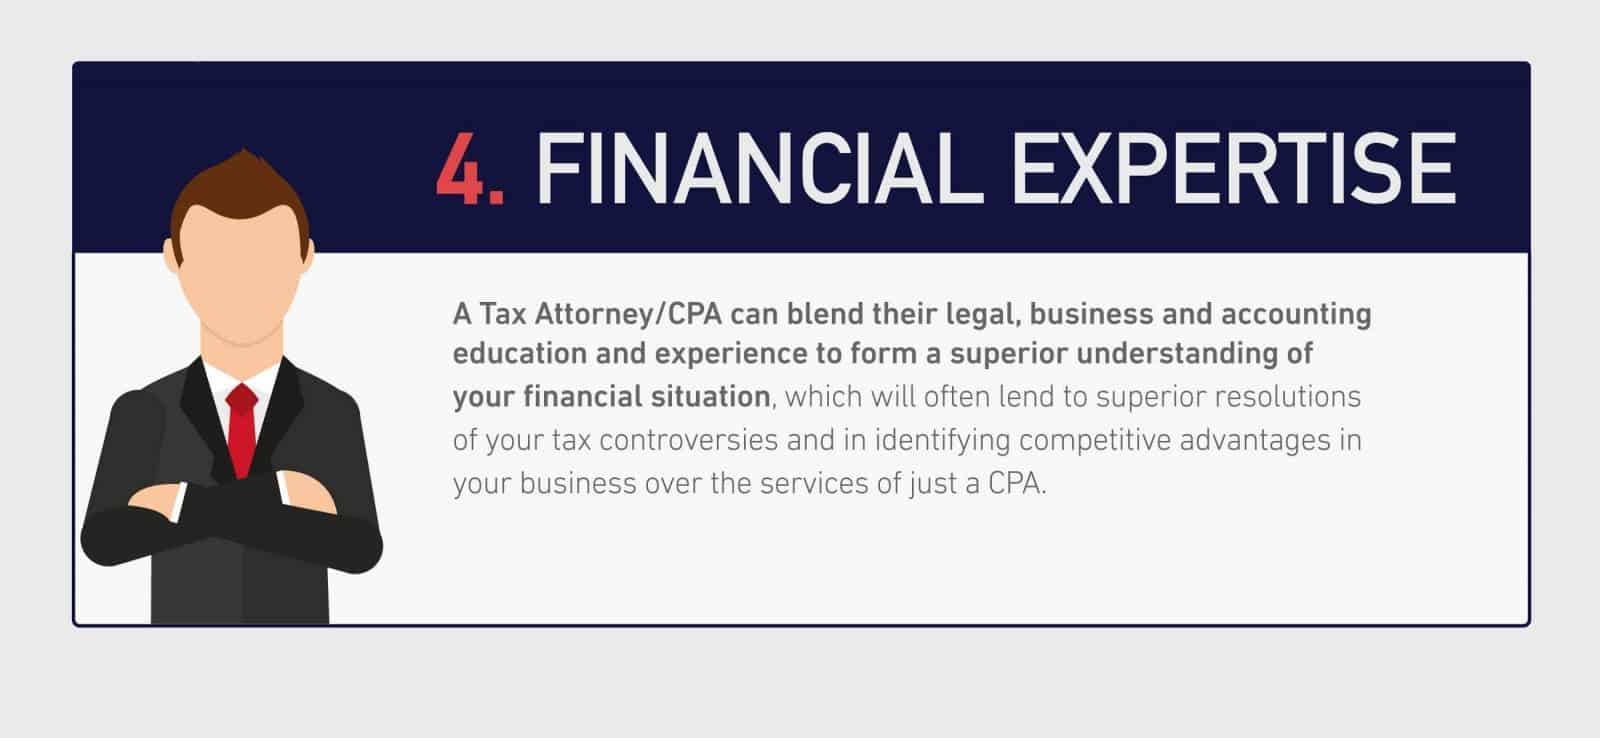 Financial-experts-klasing-associates-carlsbad-tax-attorney